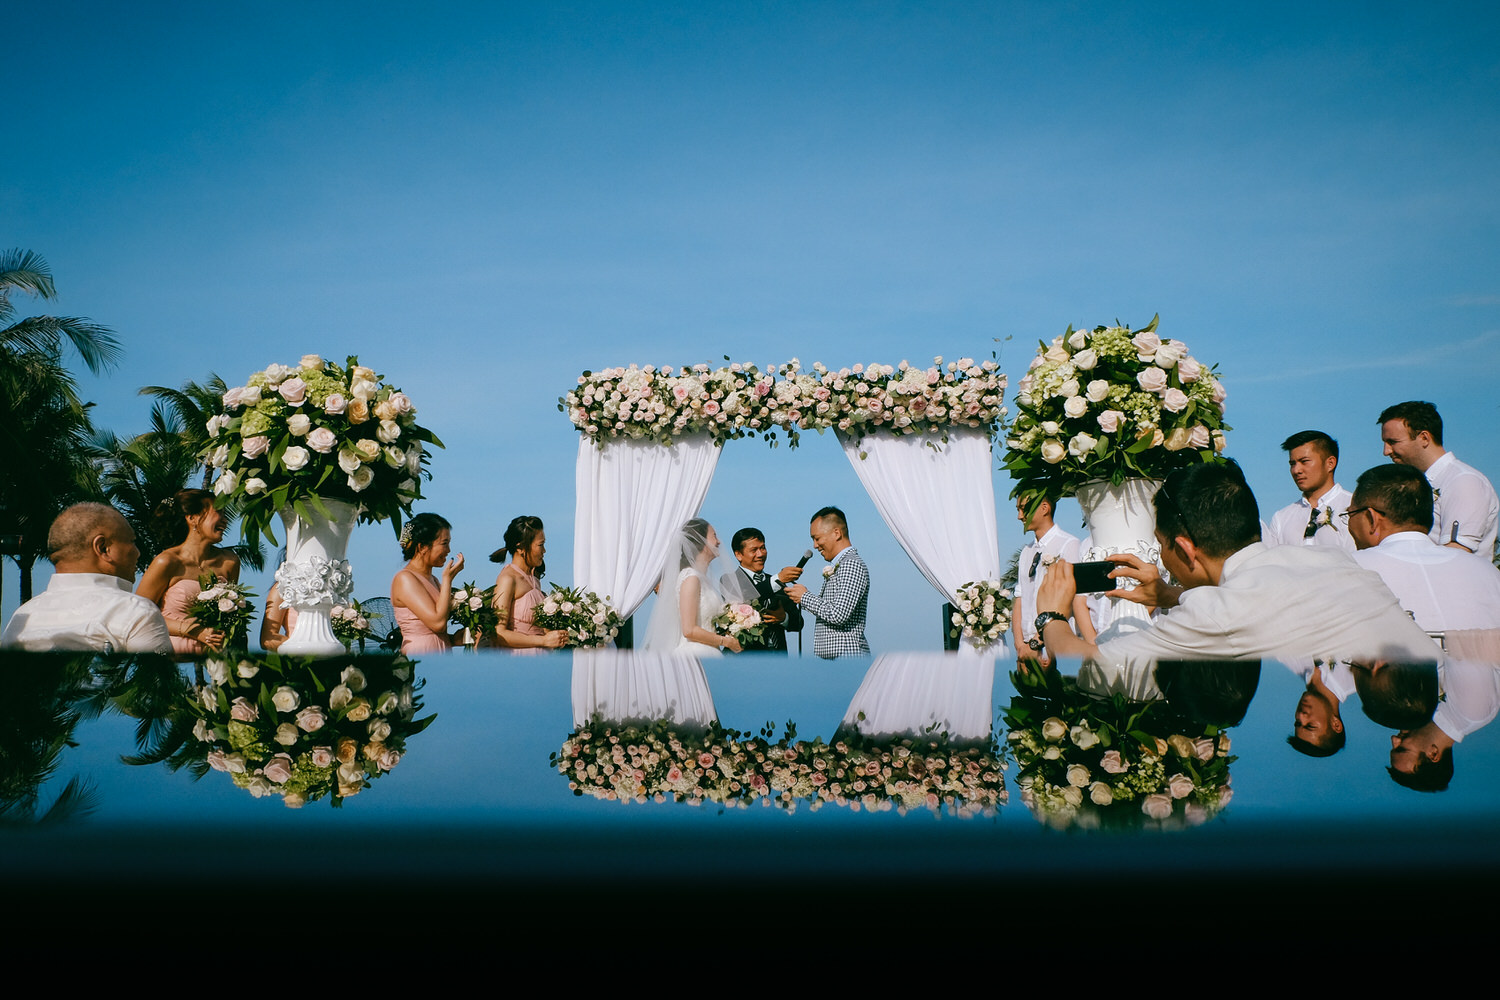 TheBest-Vietnam-Wedding-photography-139.jpg